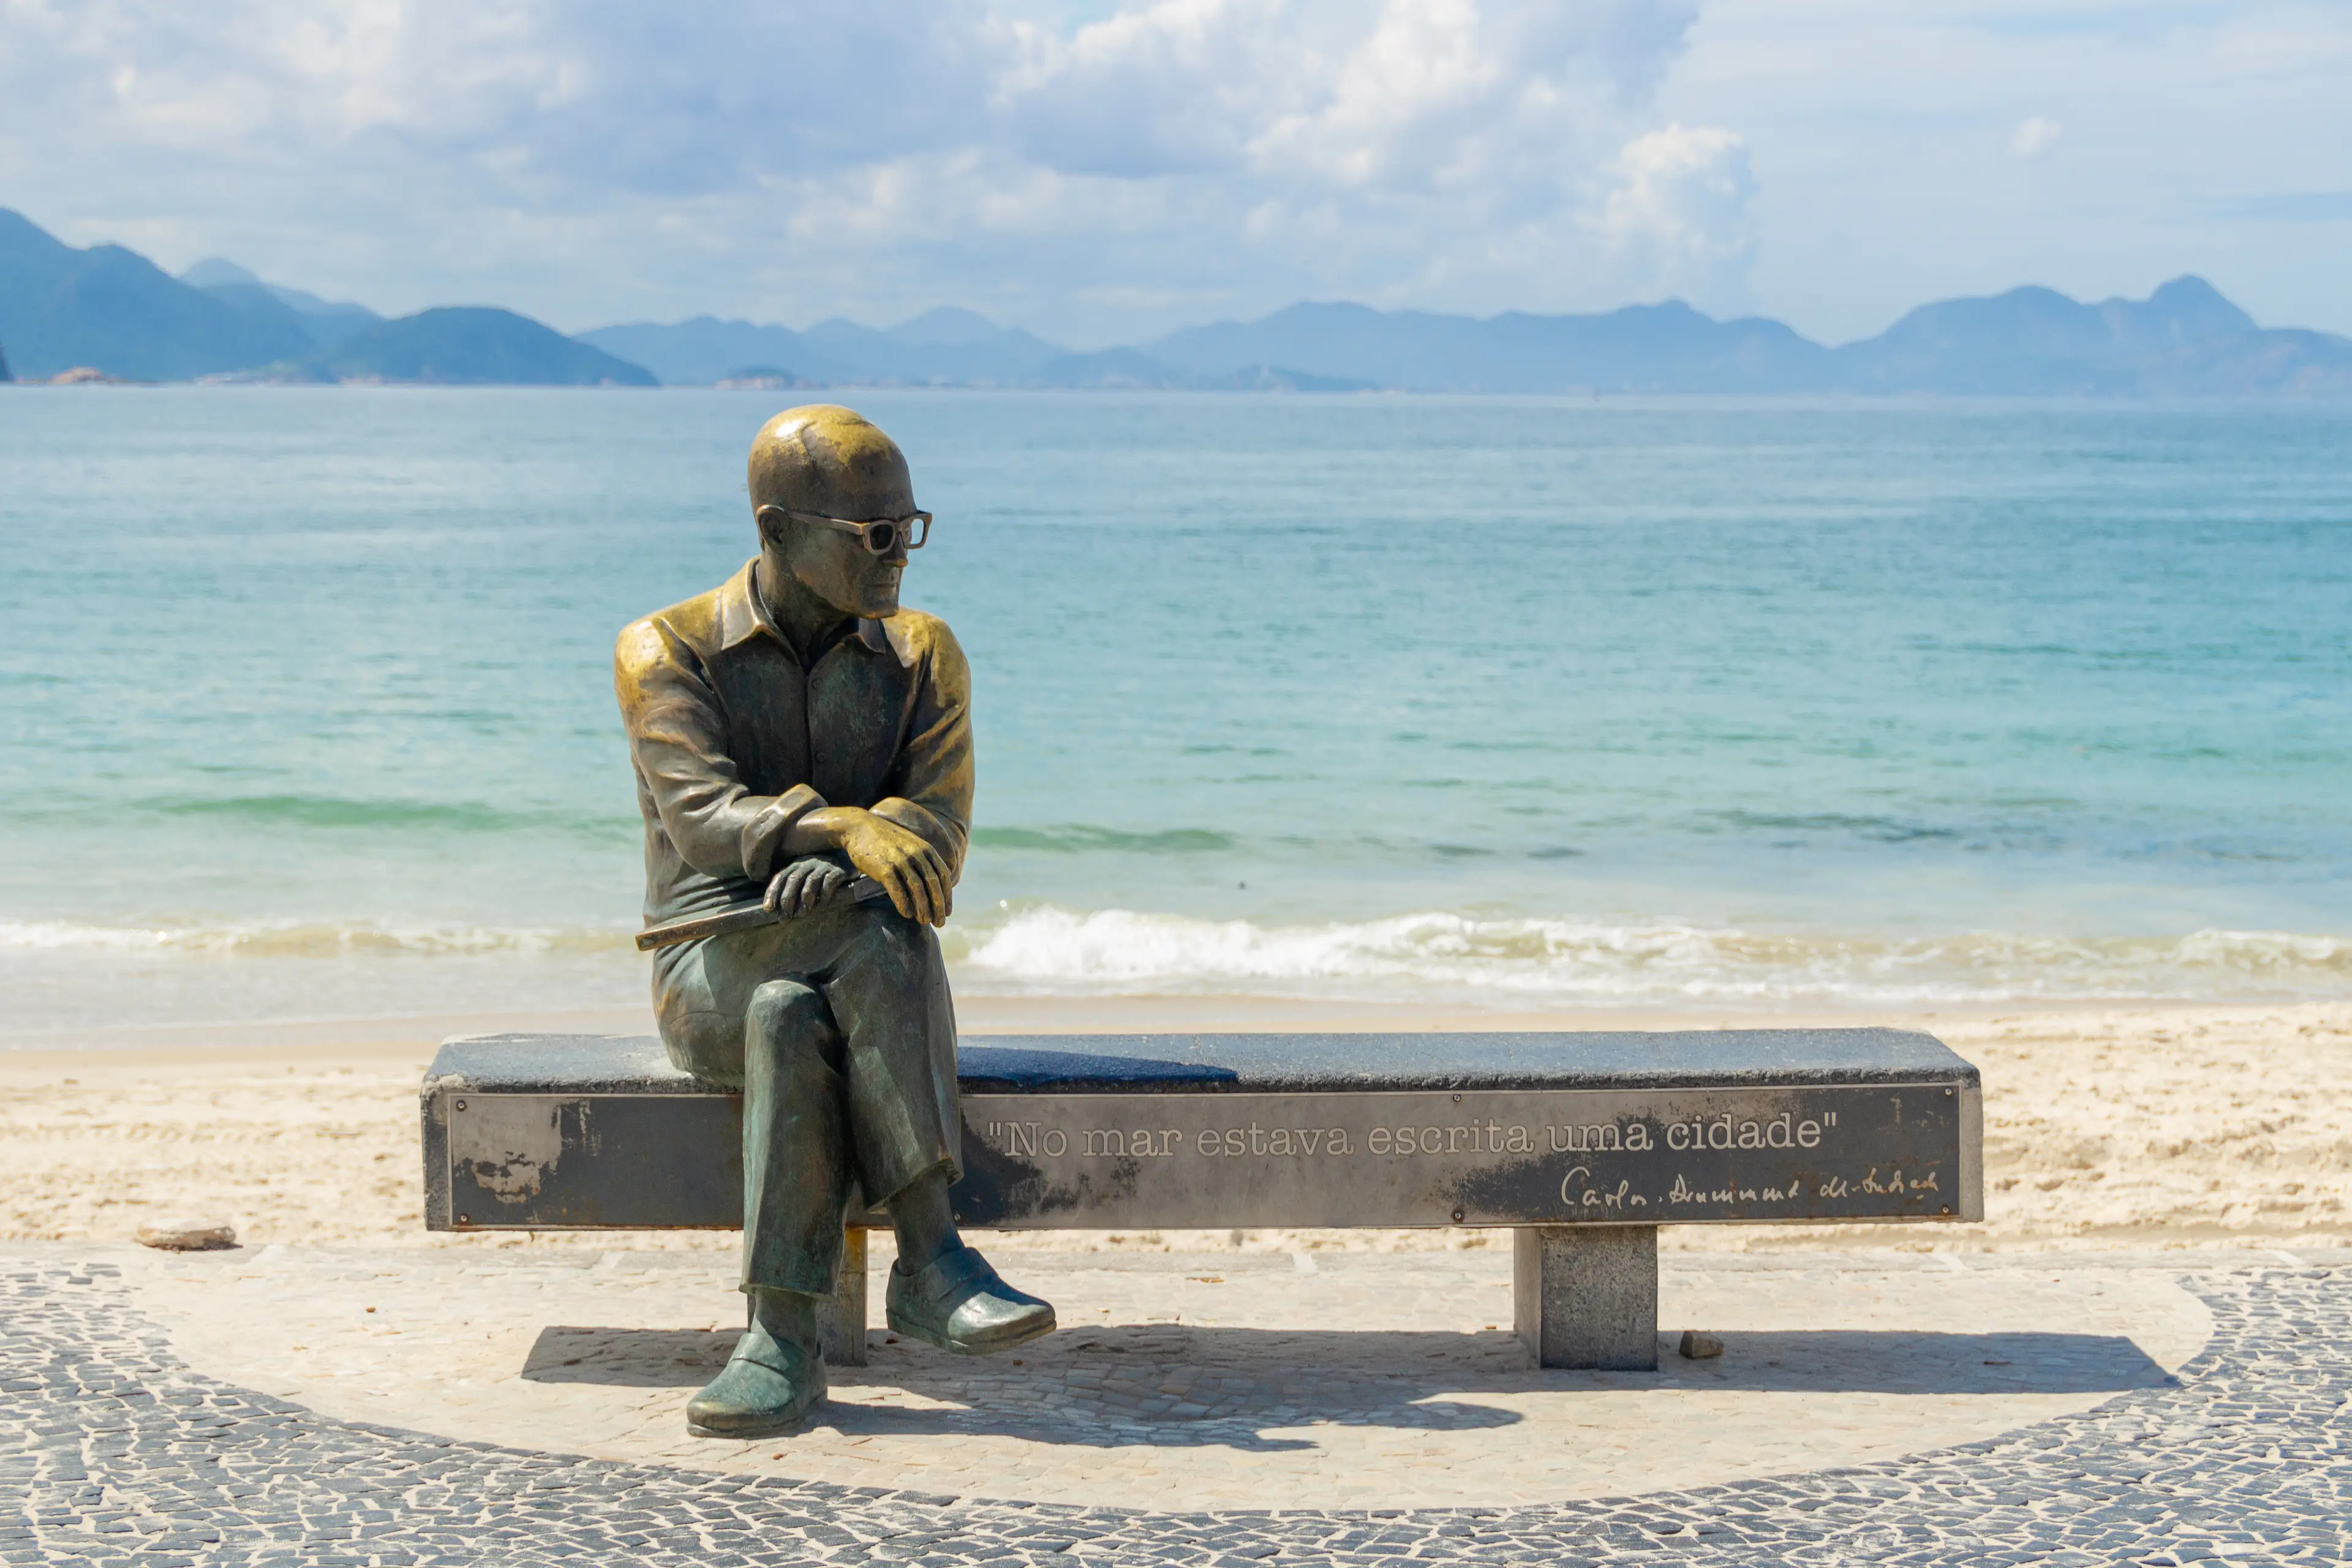 Statue of the poet Carlos Drummond de Andrade in Copacabana